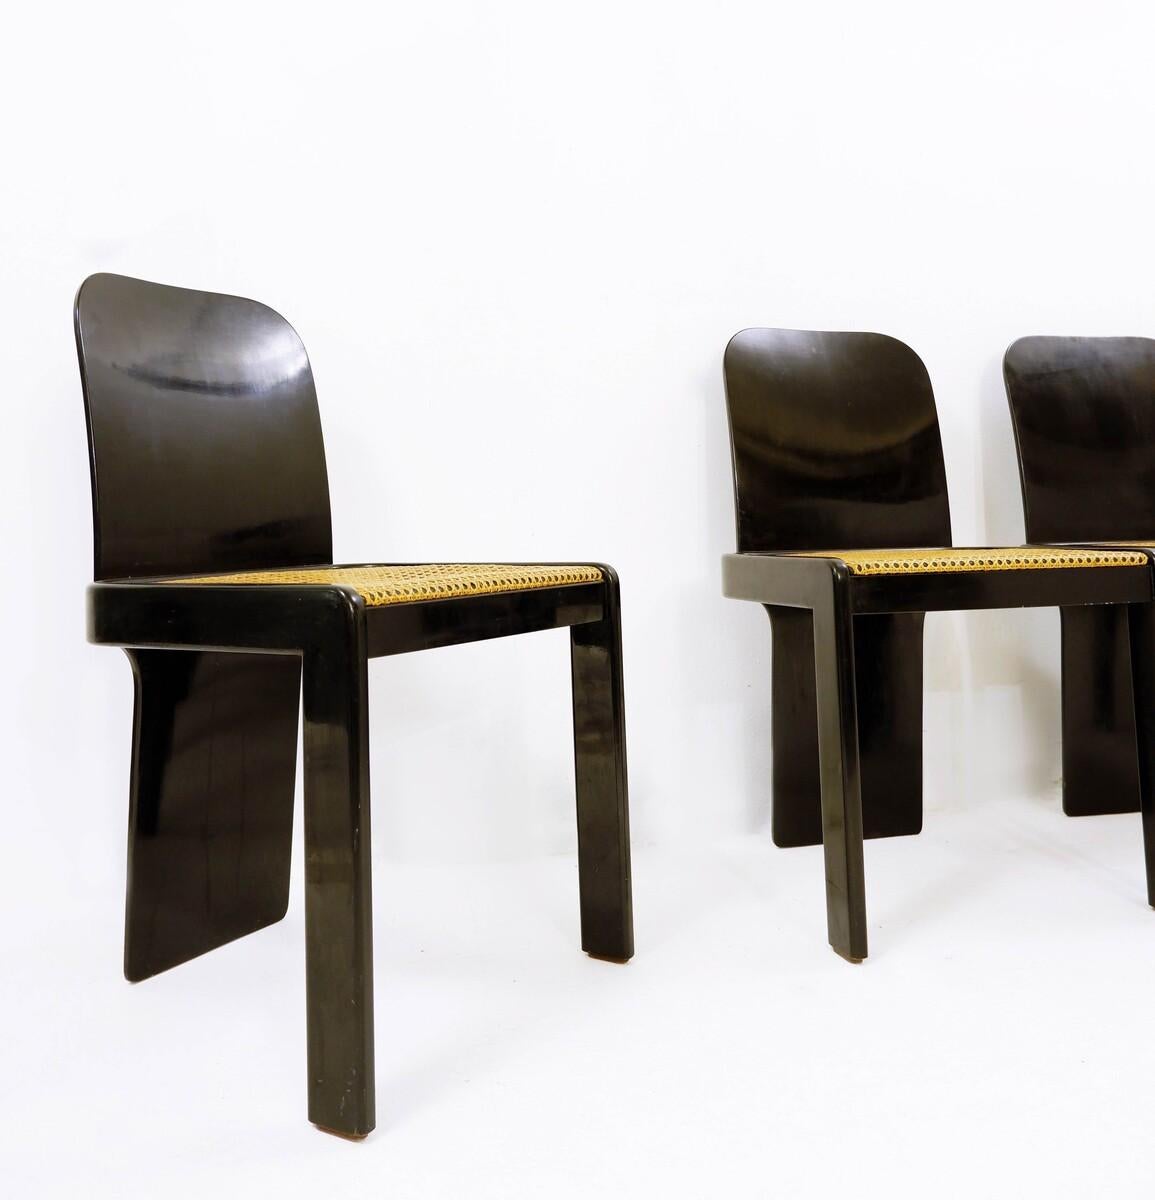 Set of 4 Chairs by Pierluigi Molinari for Pozzi Mid-Century Modern Italian 1970s 2